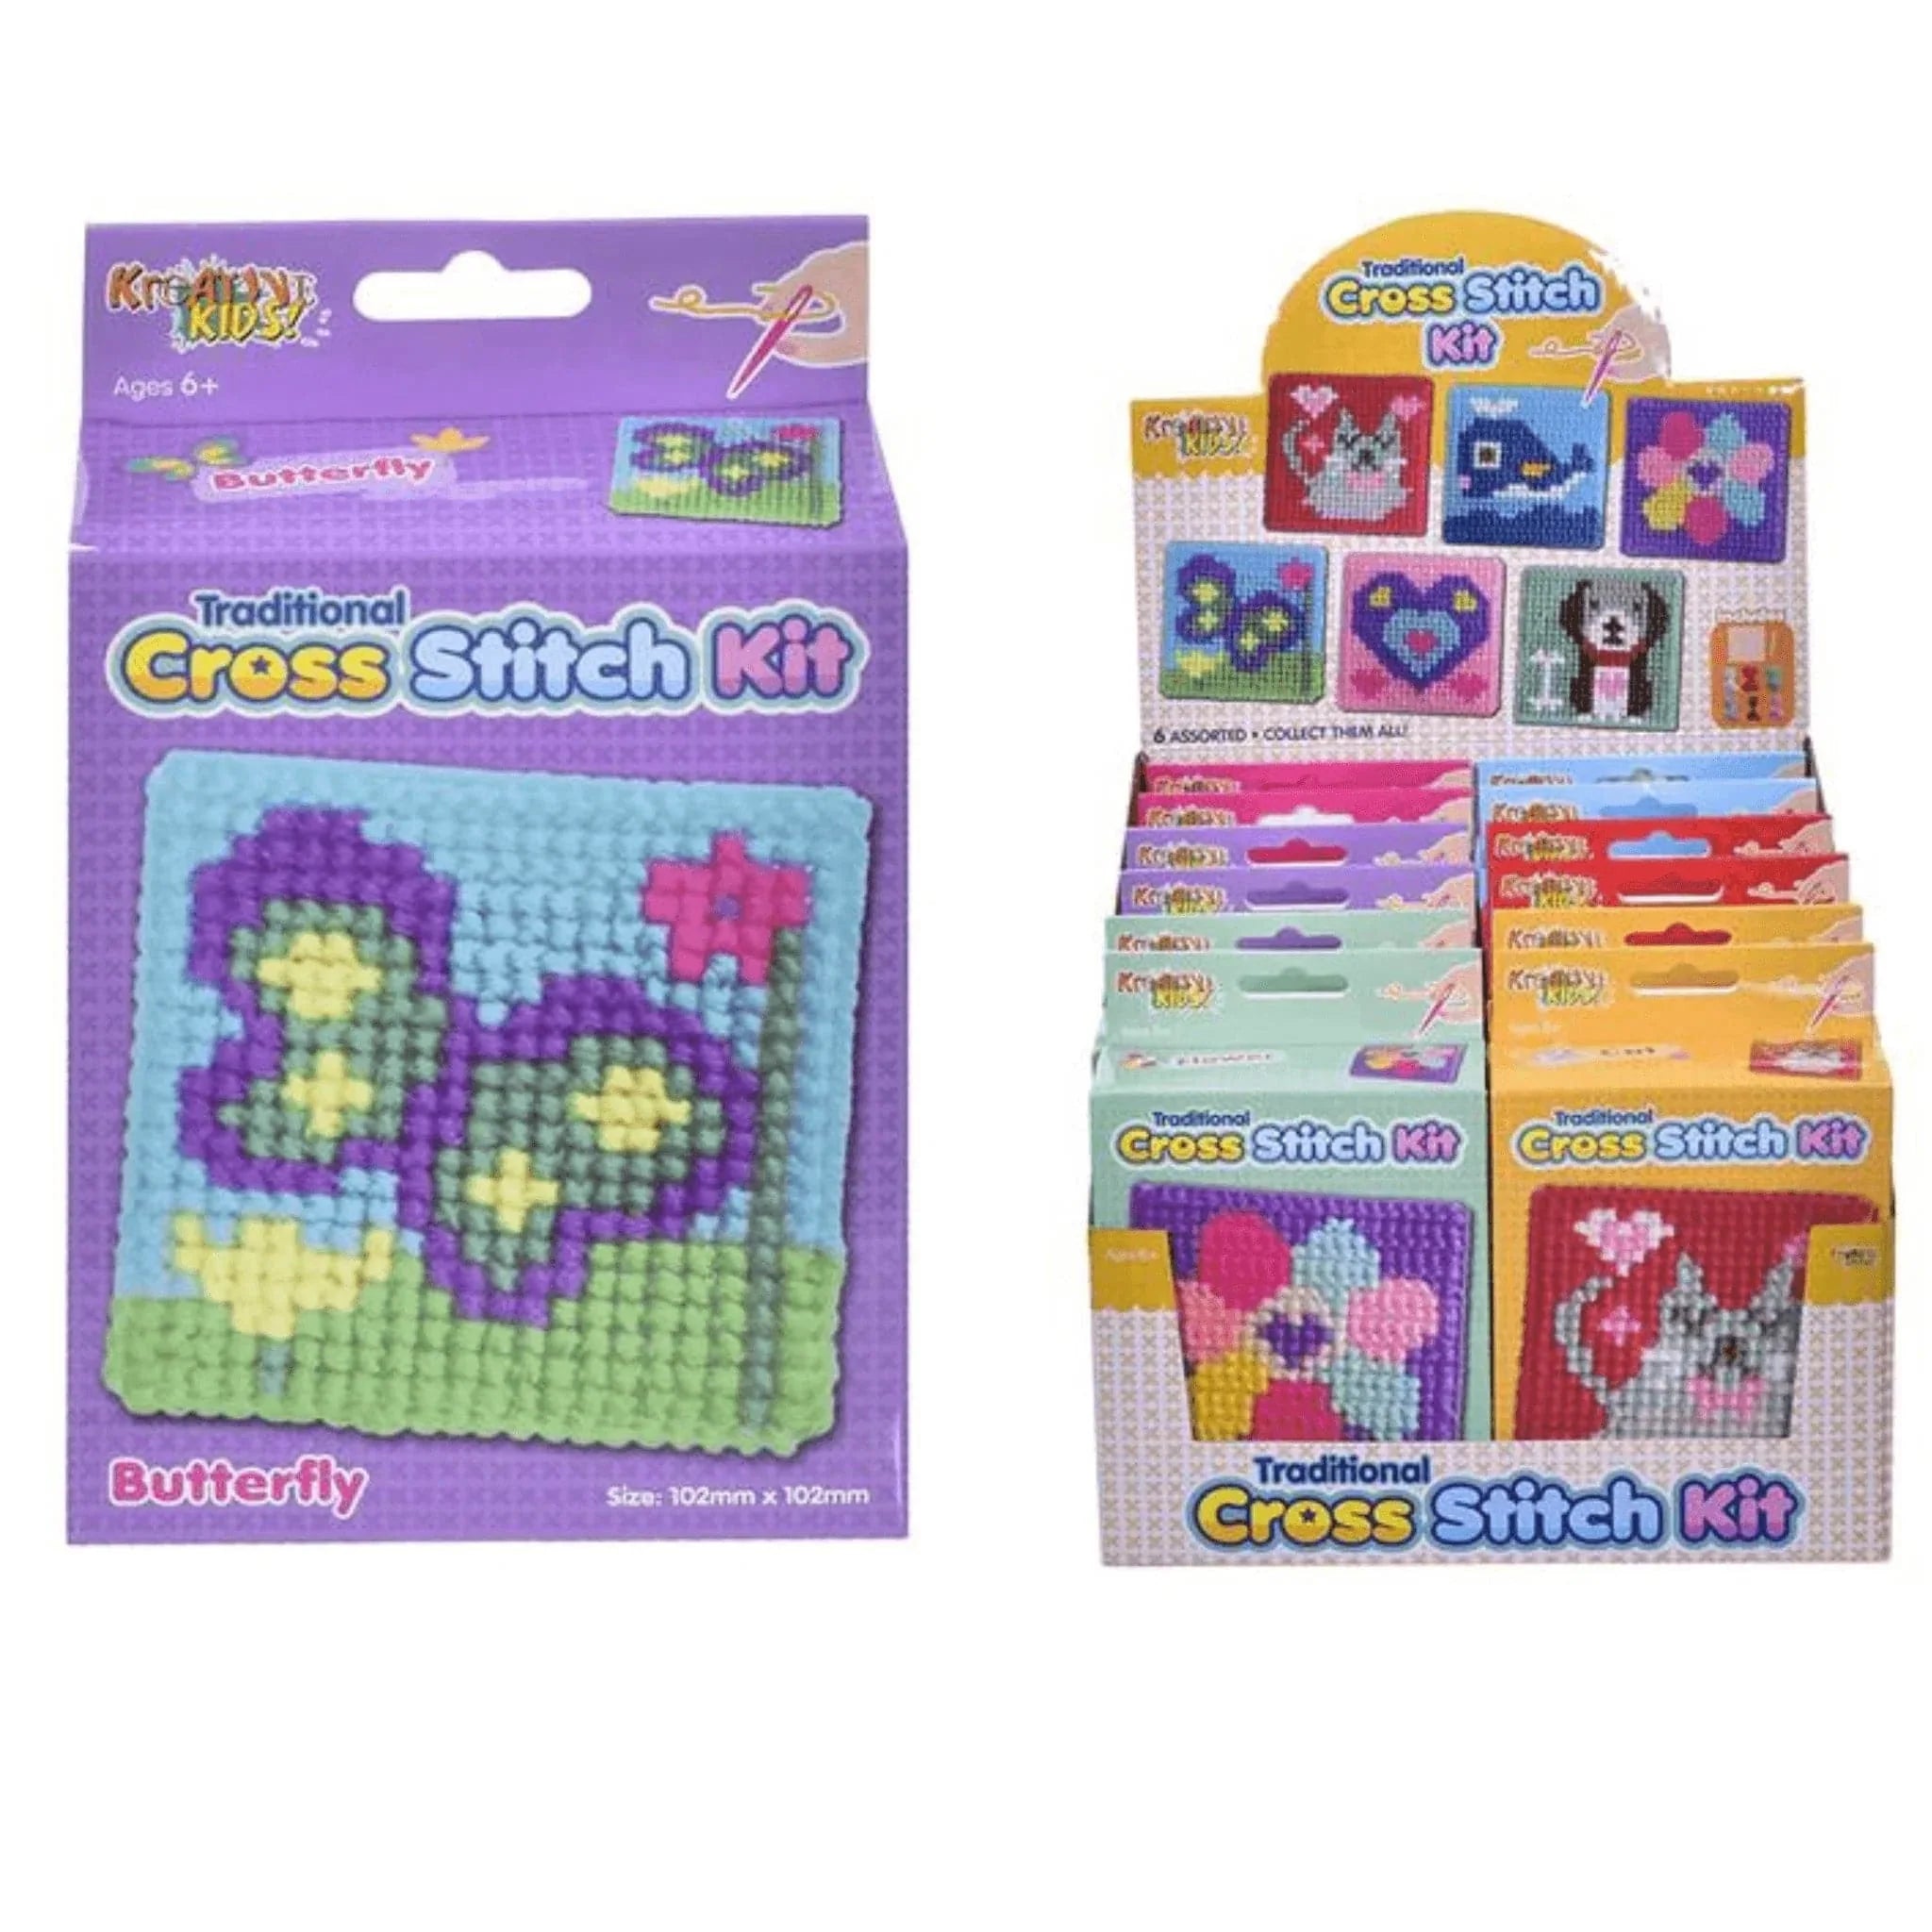 Cross Stitch Kit - Kids Party Craft